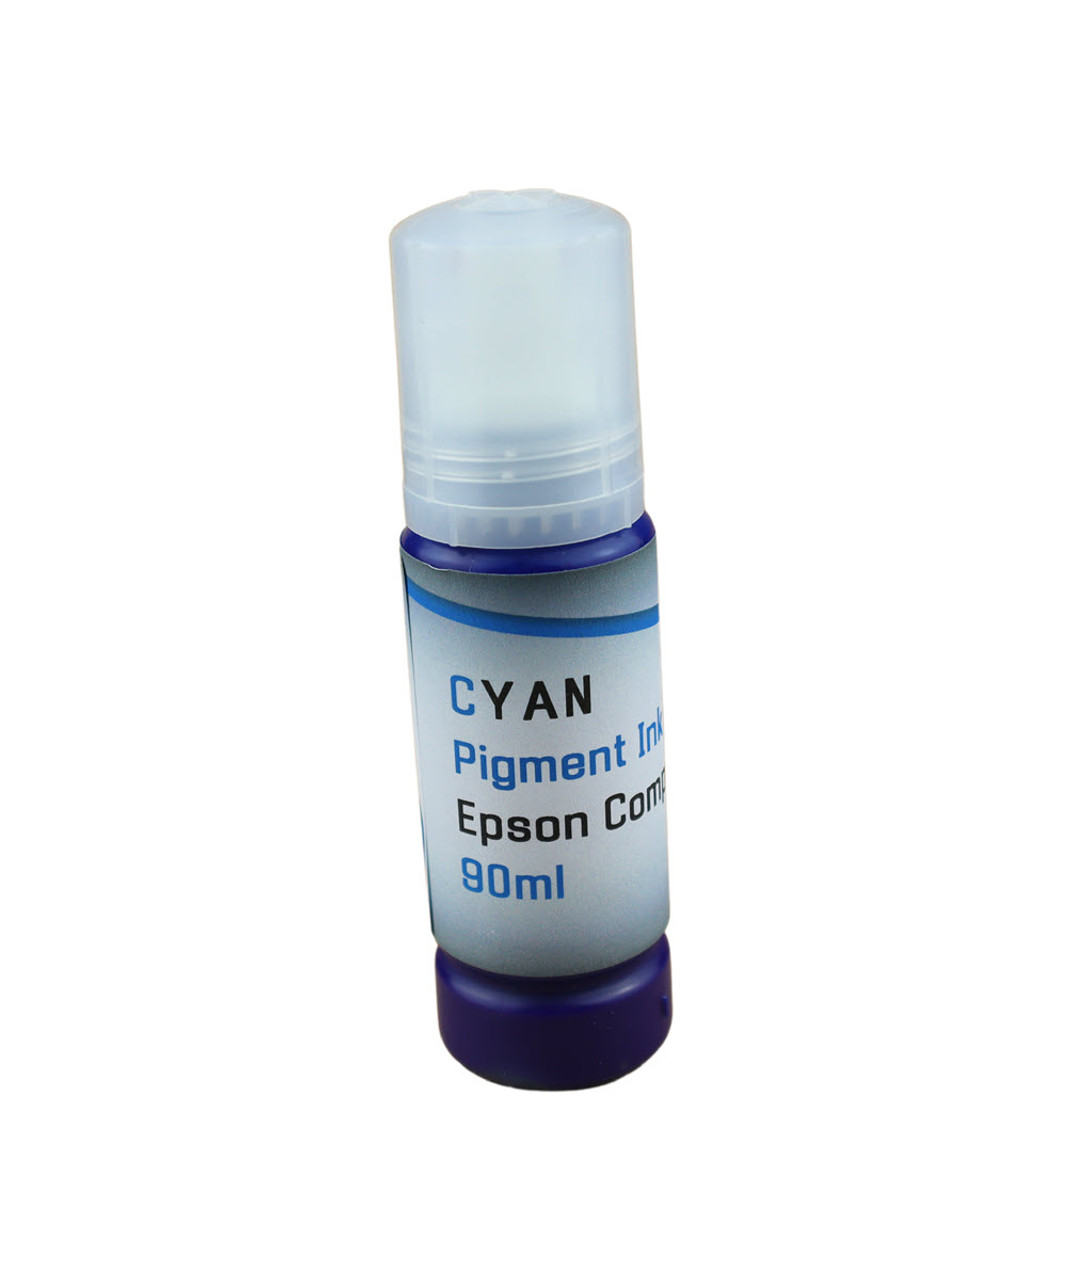 Cyan Pigment Ink 90ml Bottle for Epson EcoTank ET-8500 ET-8550 Printer